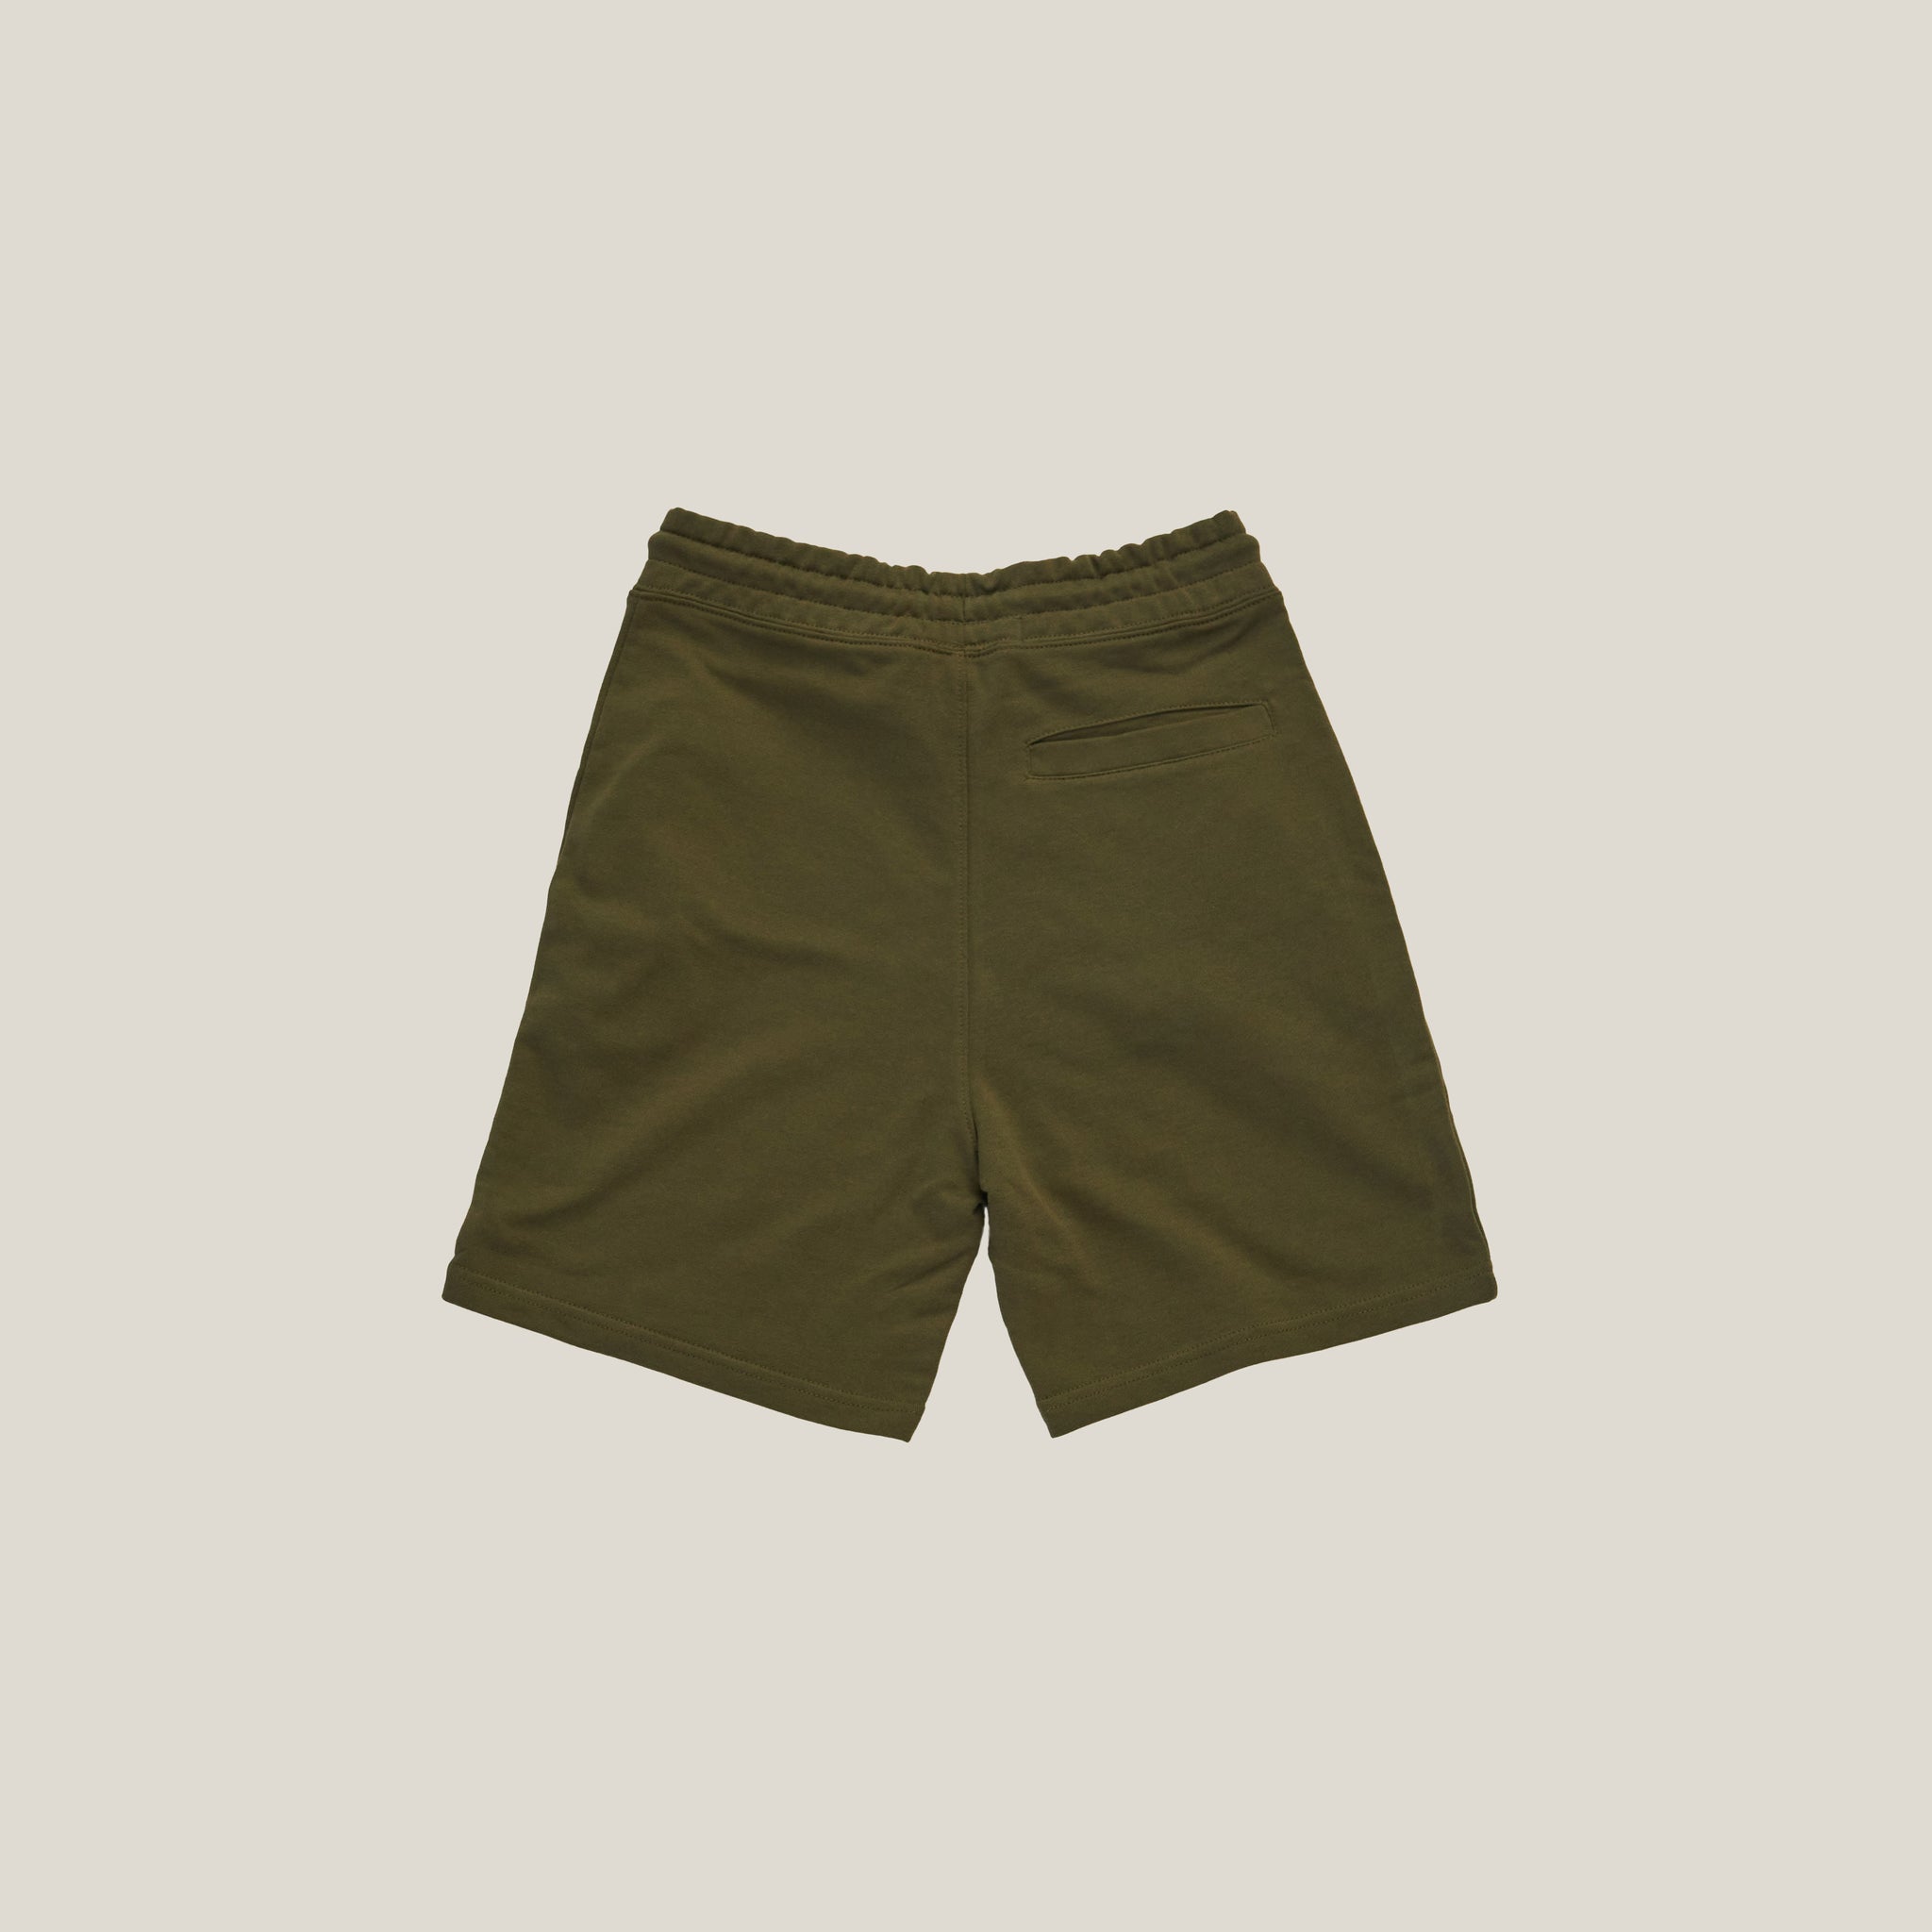 MOPQ Shorts (Olive)